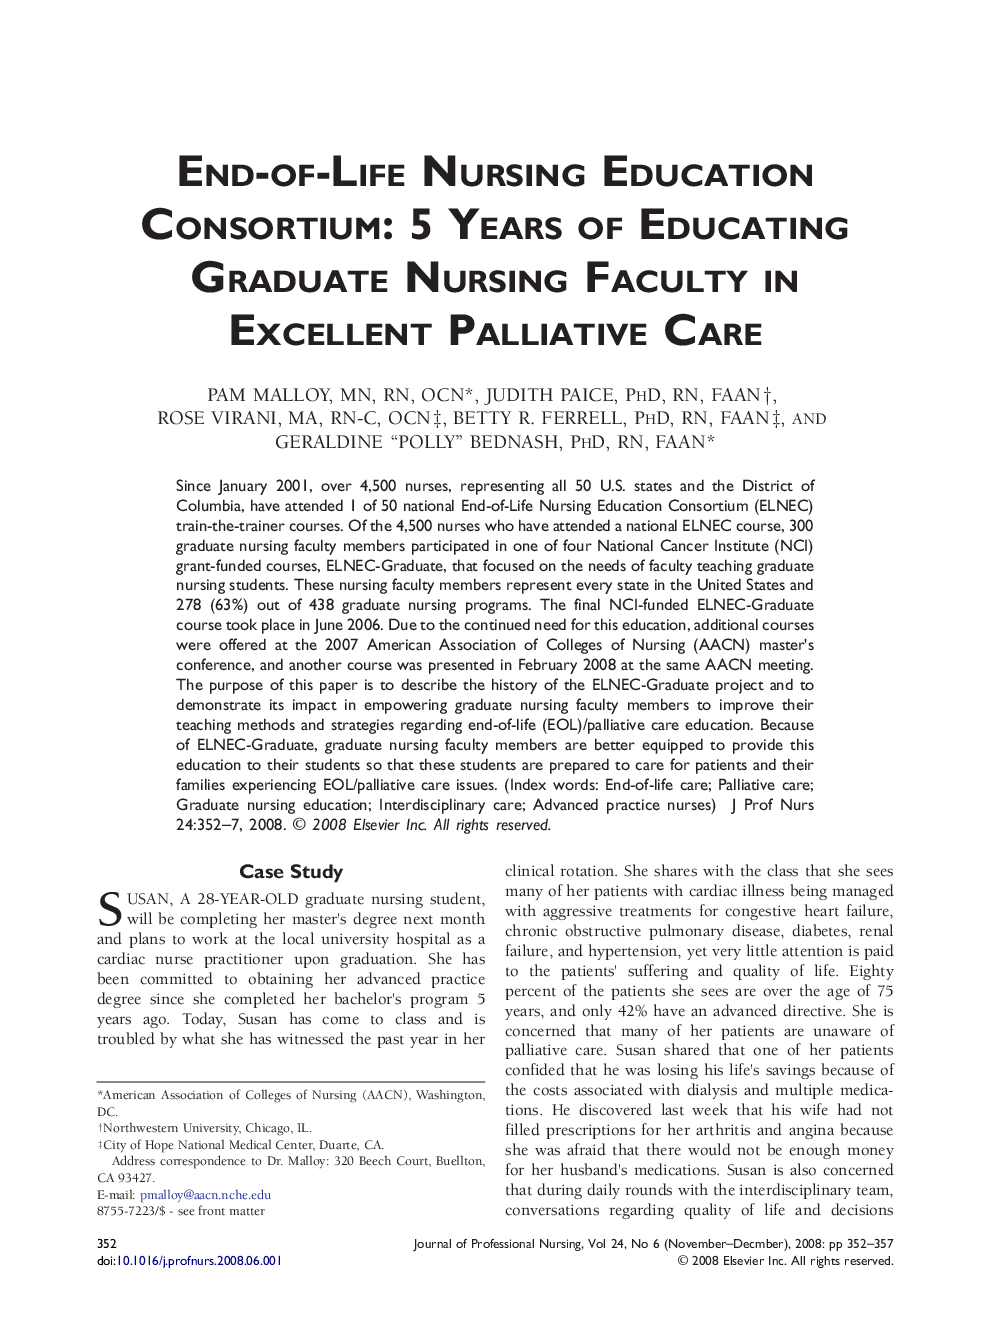 End-of-Life Nursing Education Consortium: 5 Years of Educating Graduate Nursing Faculty in Excellent Palliative Care